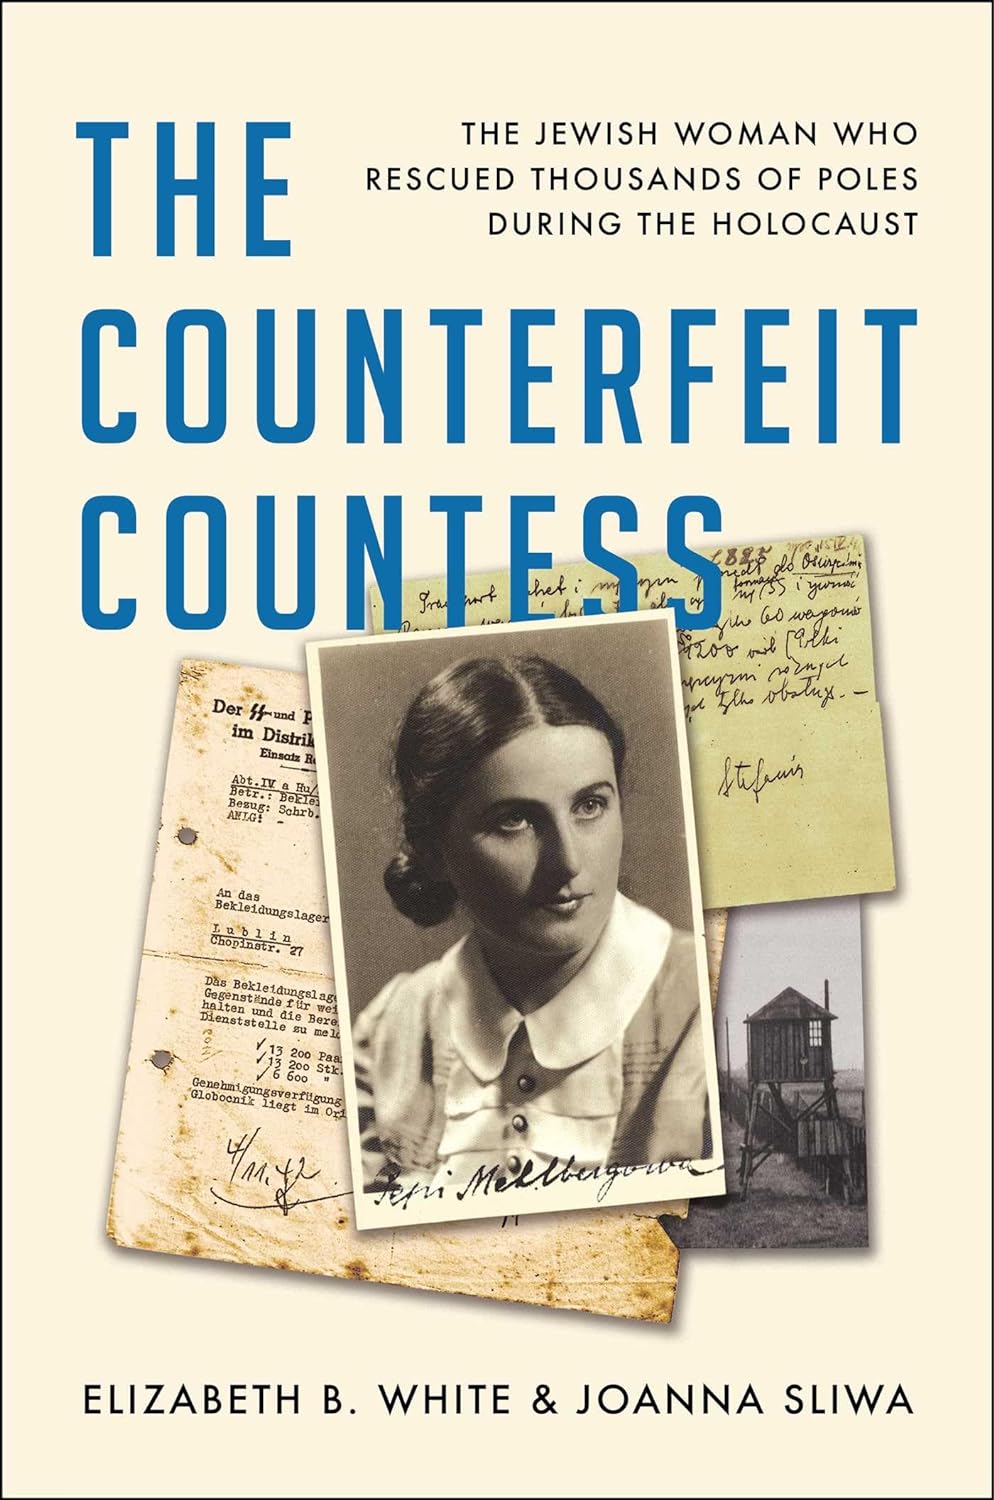 The Counterfeit Countess by Elizabeth B. White and Joanna Sliwa